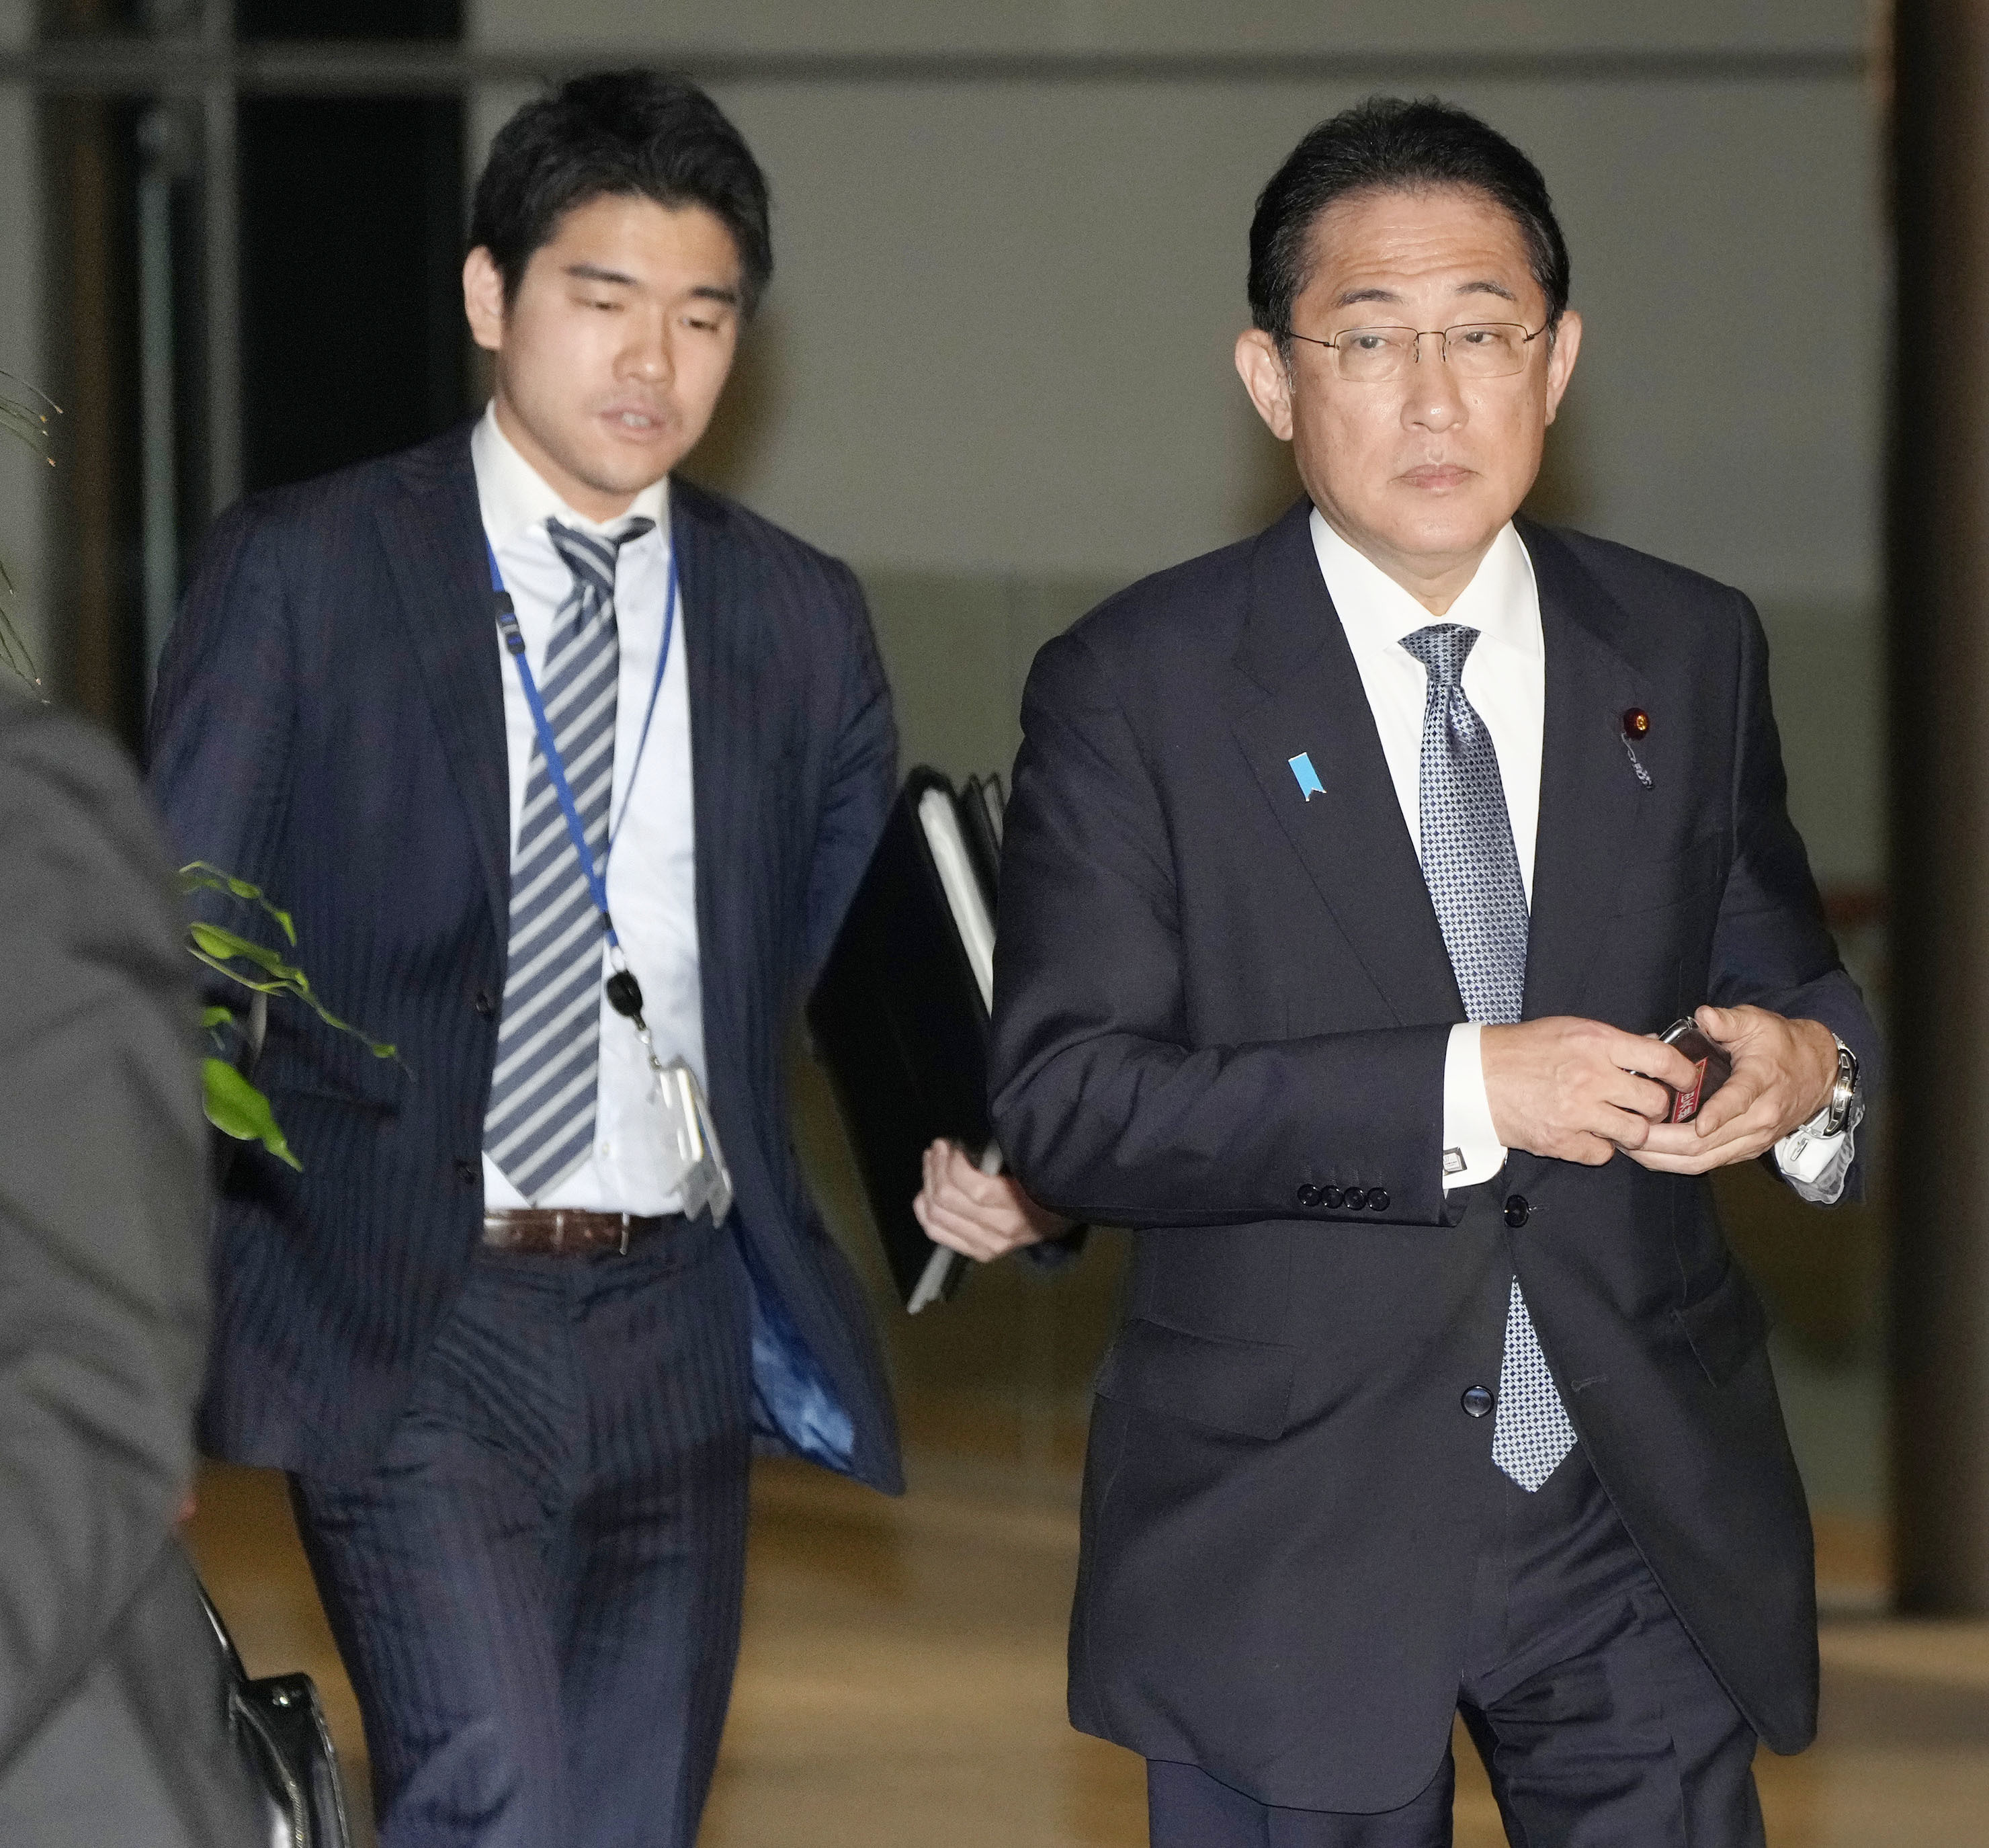 Japan’s Fumio Kishida and his son Shotaro, who has resigned as an executive secretary to the prime minister. Photo: Kyodo